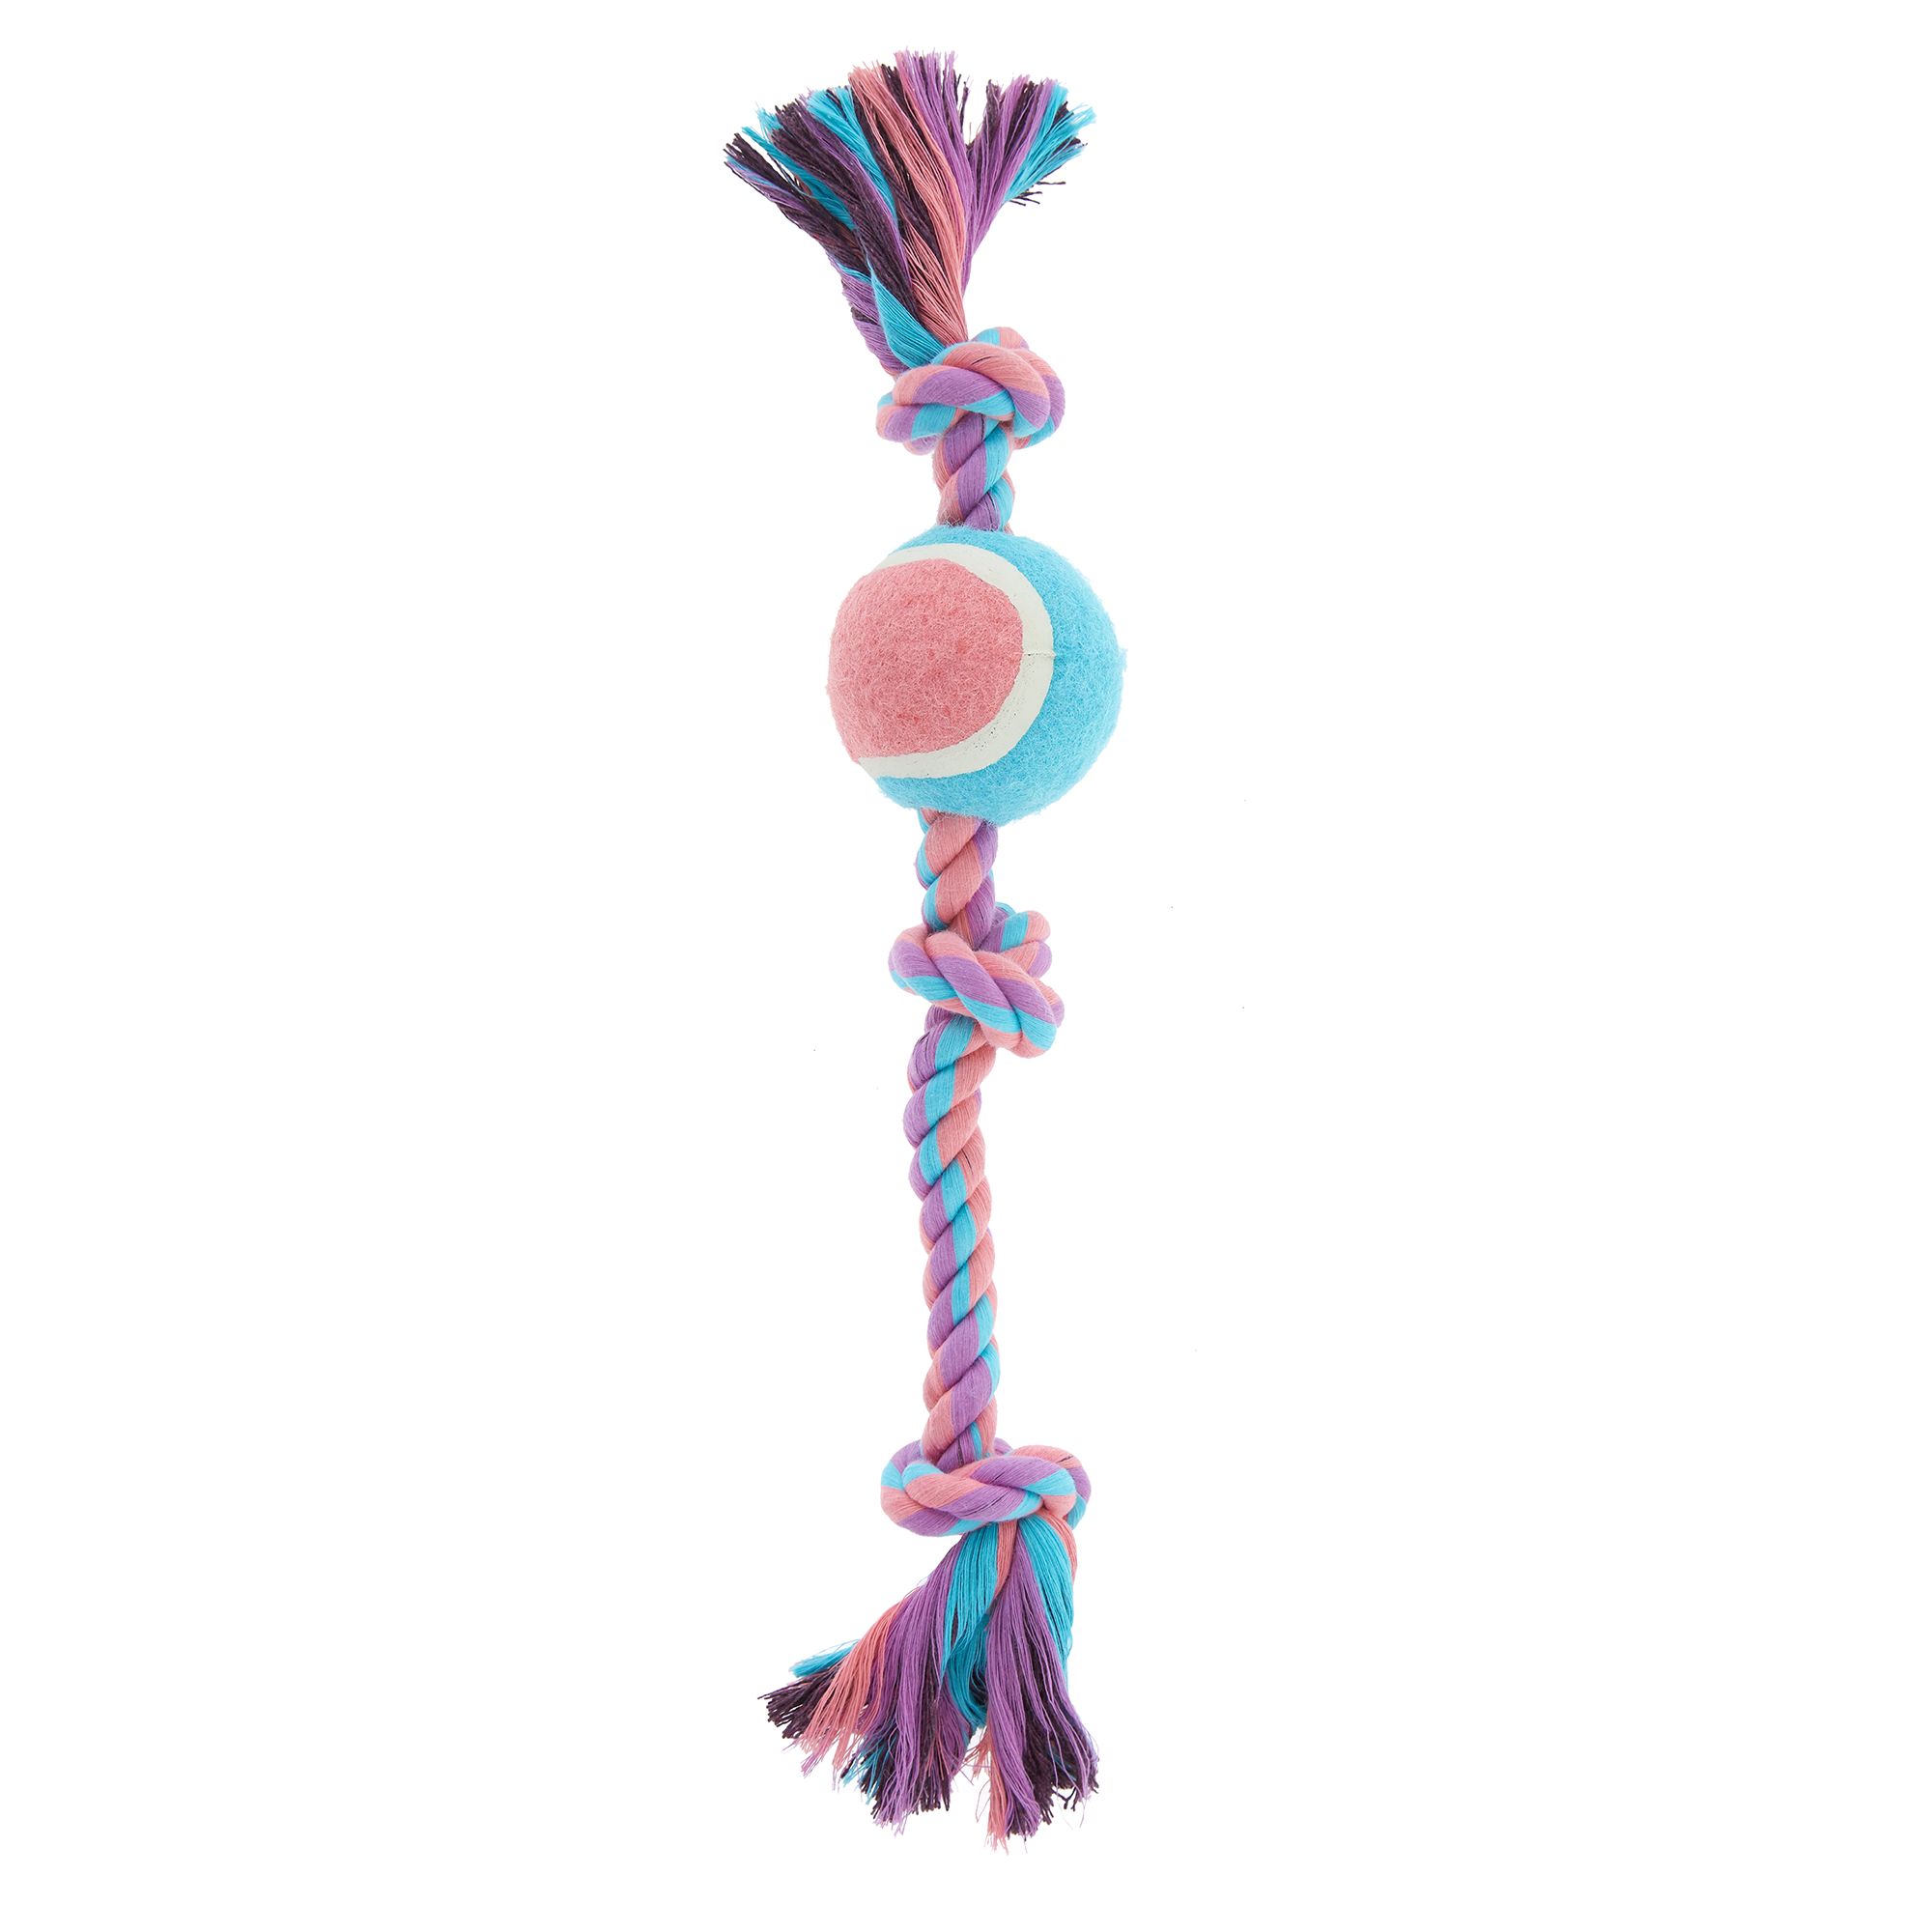 petsmart rope toy